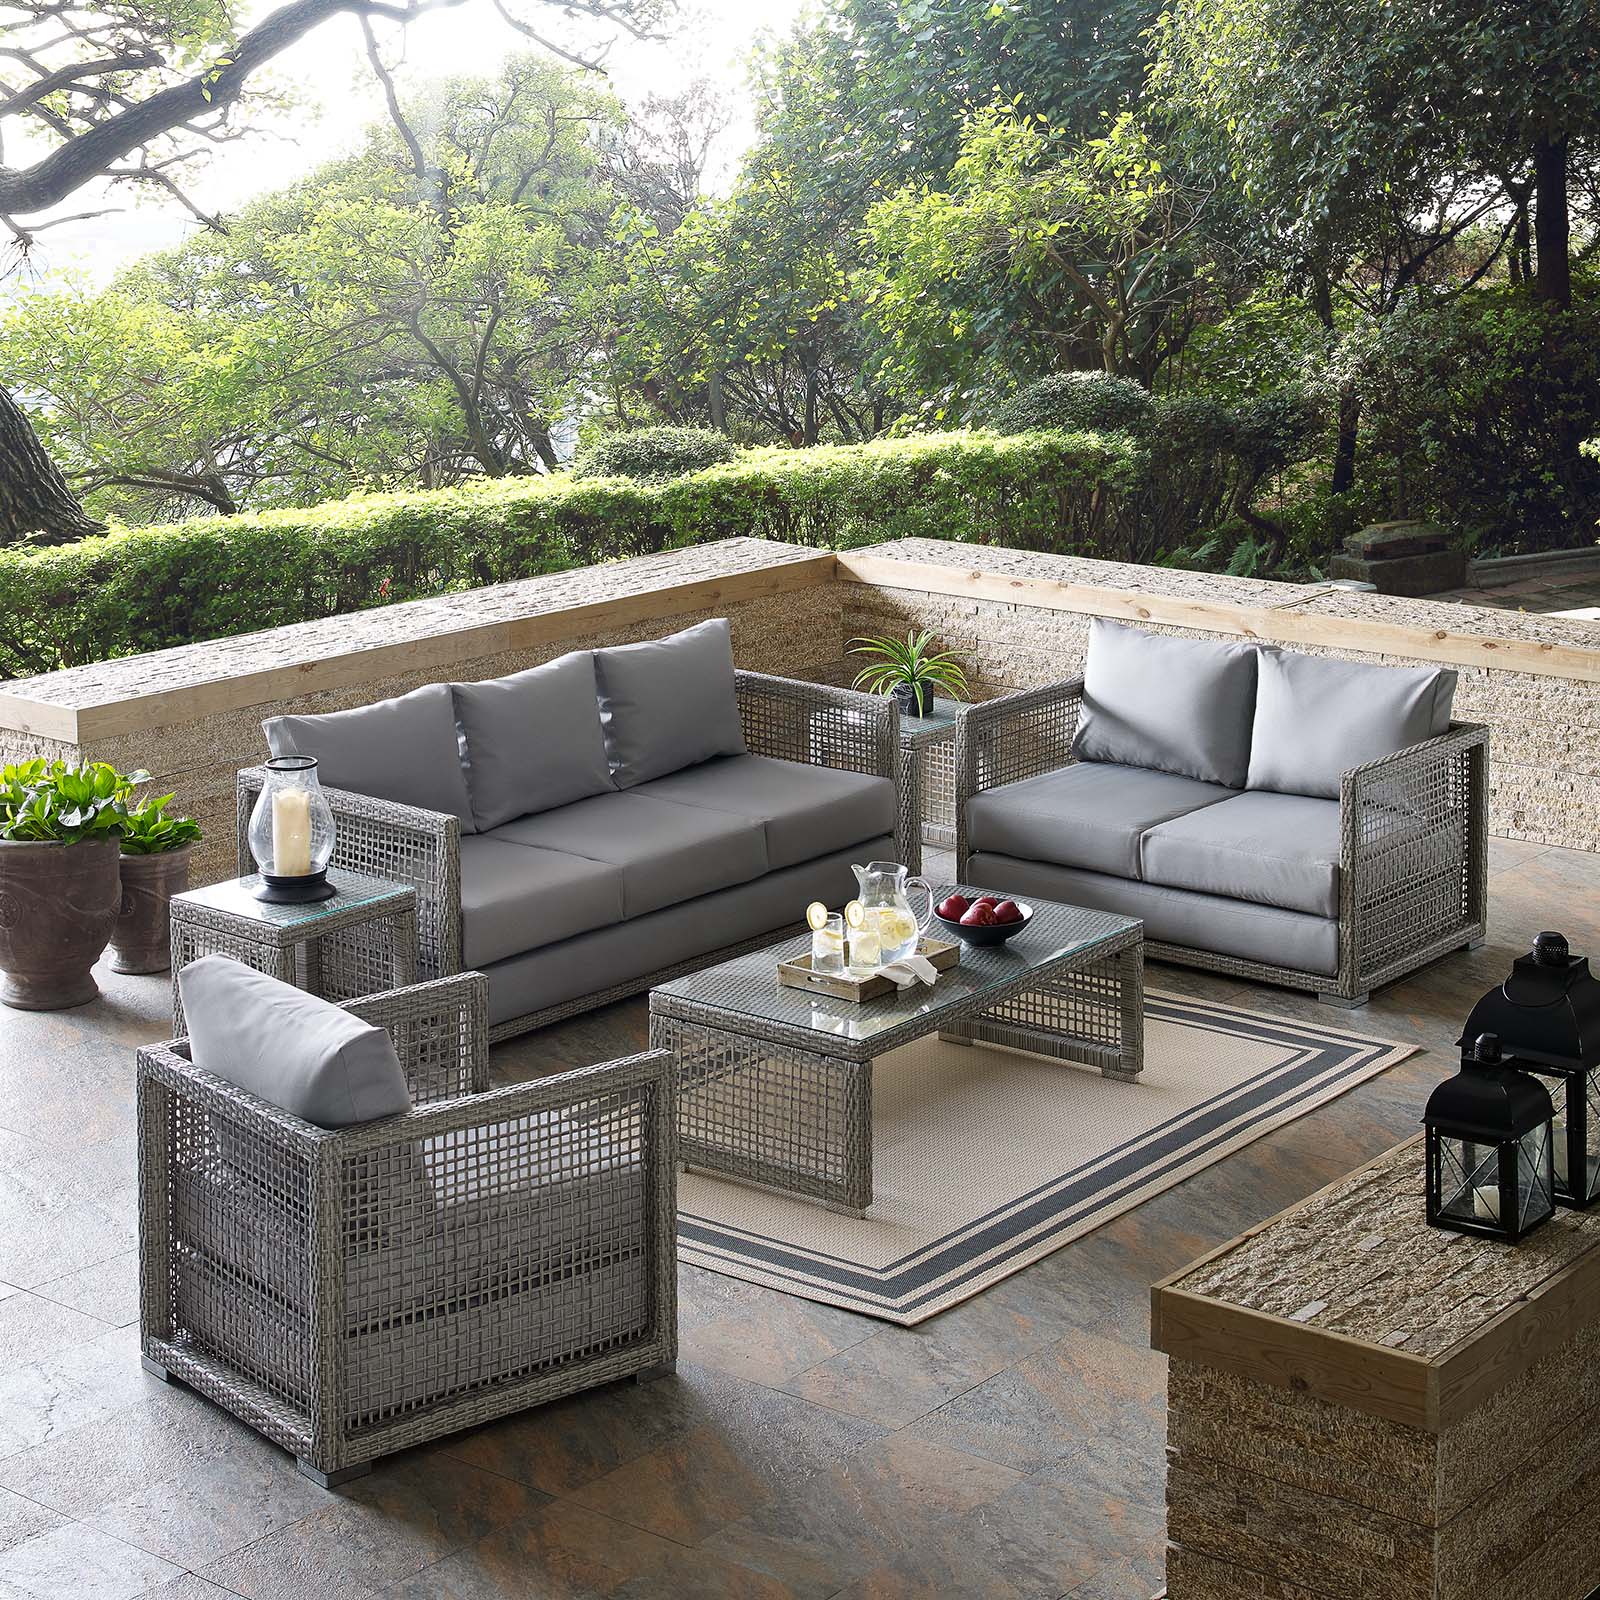 Modern Contemporary Urban Design Outdoor Patio Balcony Garden Furniture Lounge Chair, Sofa and Table Set, Rattan Wicker, Grey Gray - image 2 of 8